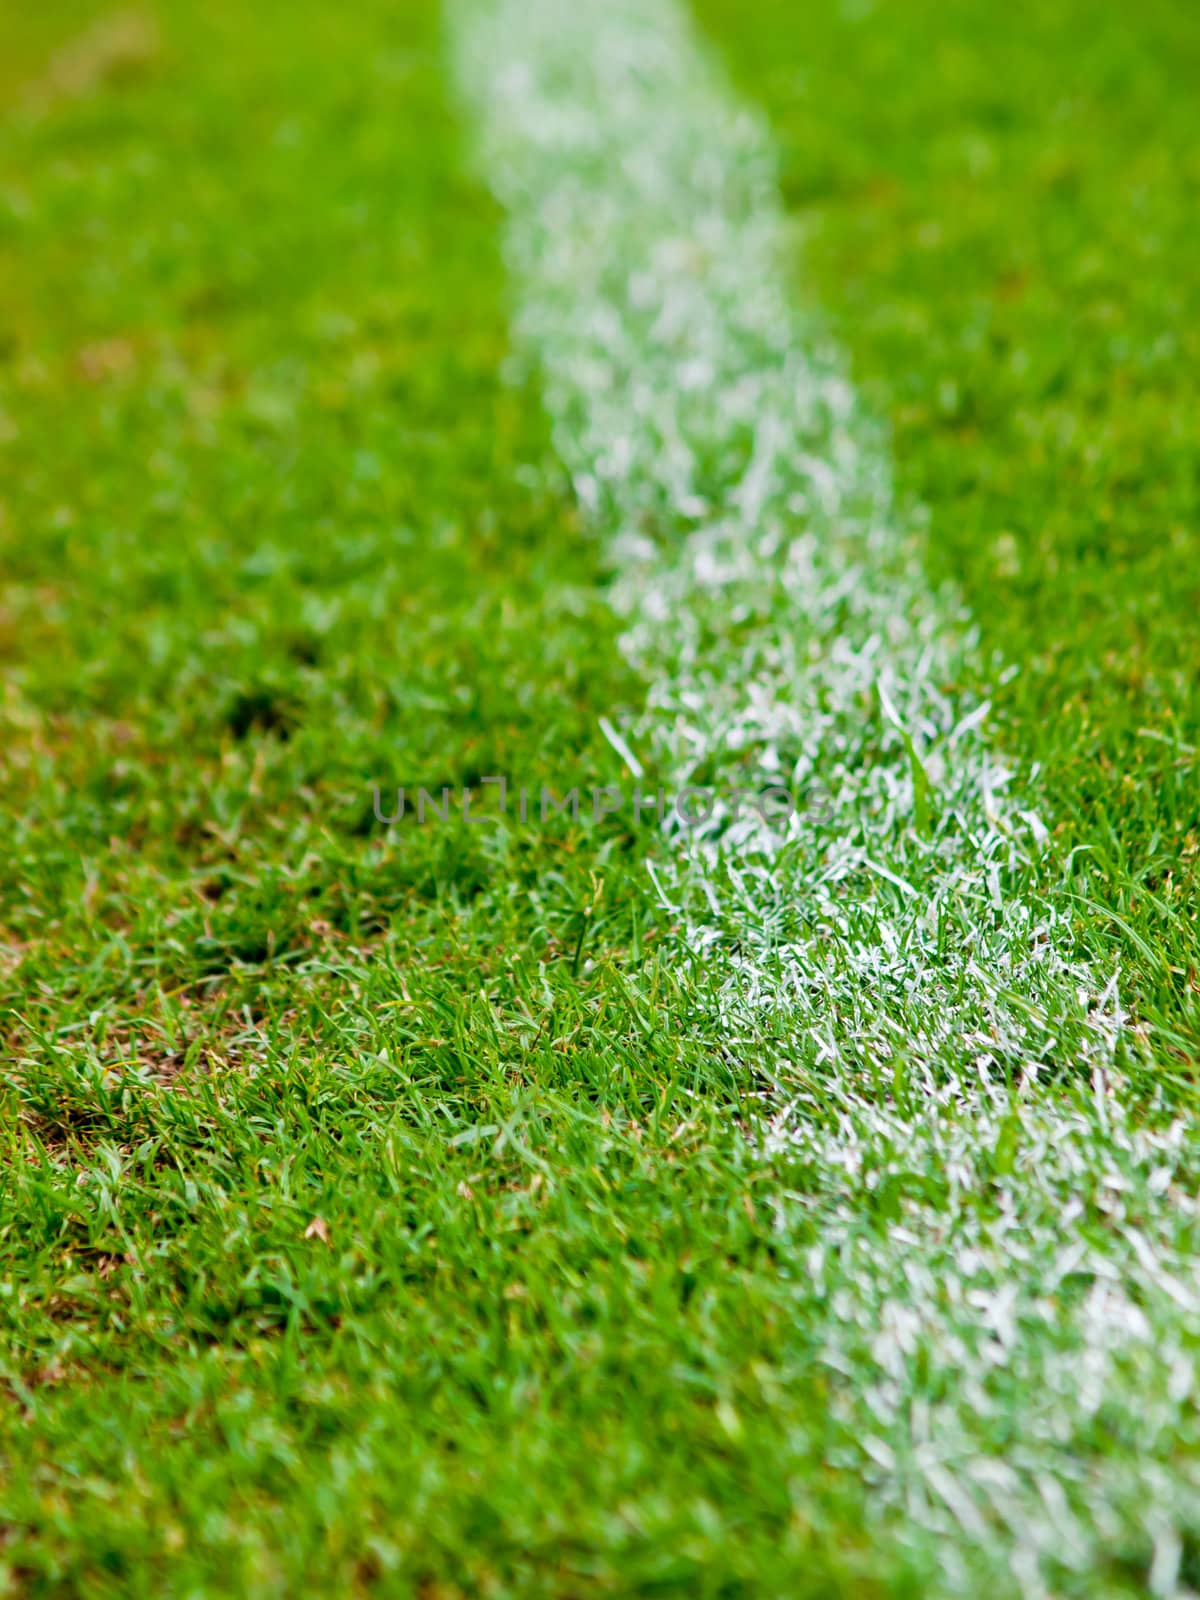 White stripe on the green soccer field 